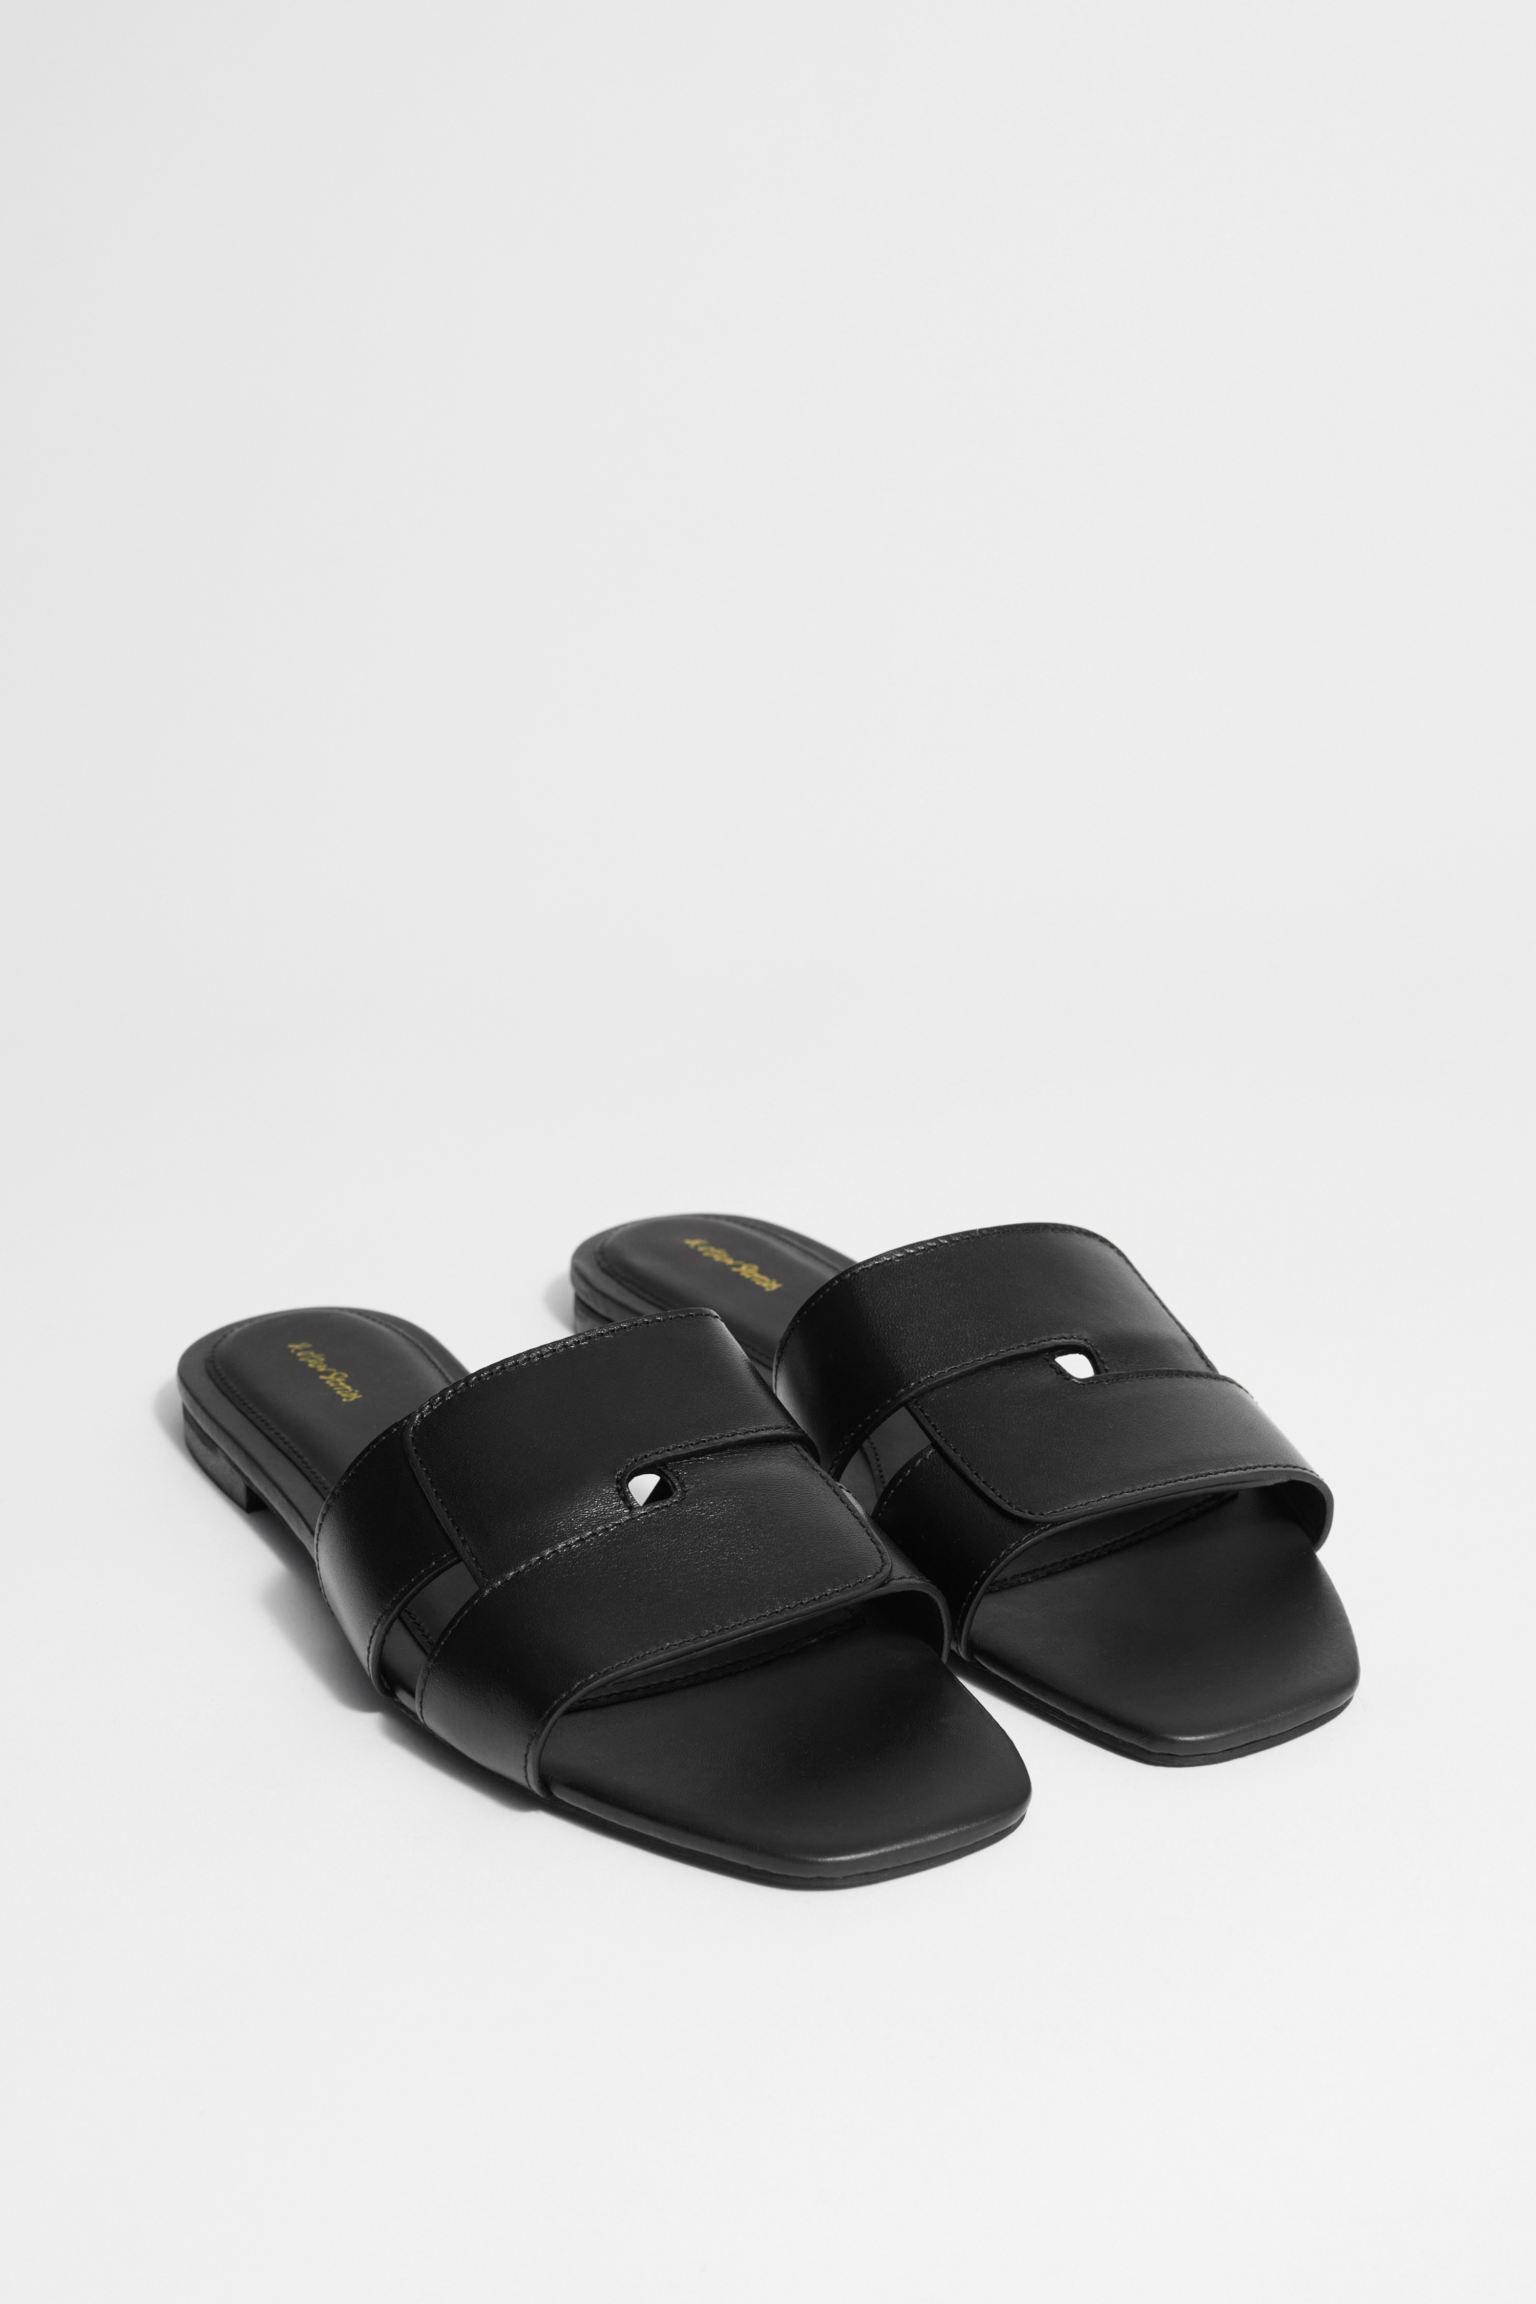 Woven Leather Slides - No heel - Brown - Ladies | H&M GB | H&M (UK, MY, IN, SG, PH, TW, HK)